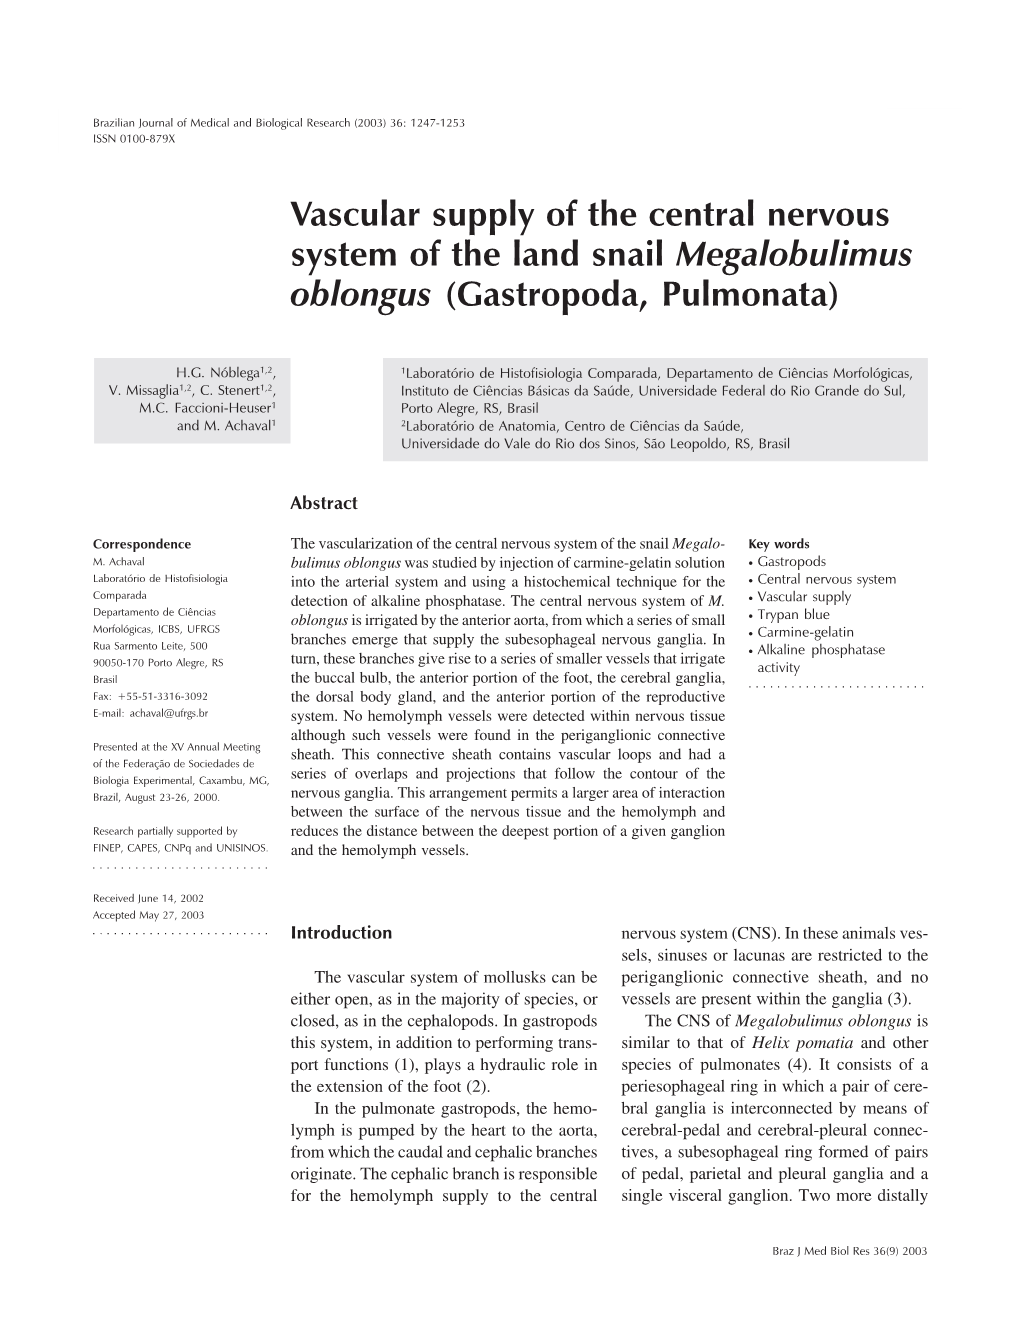 Vascular Supply of the Central Nervous System of the Land Snail Megalobulimus Oblongus (Gastropoda, Pulmonata)